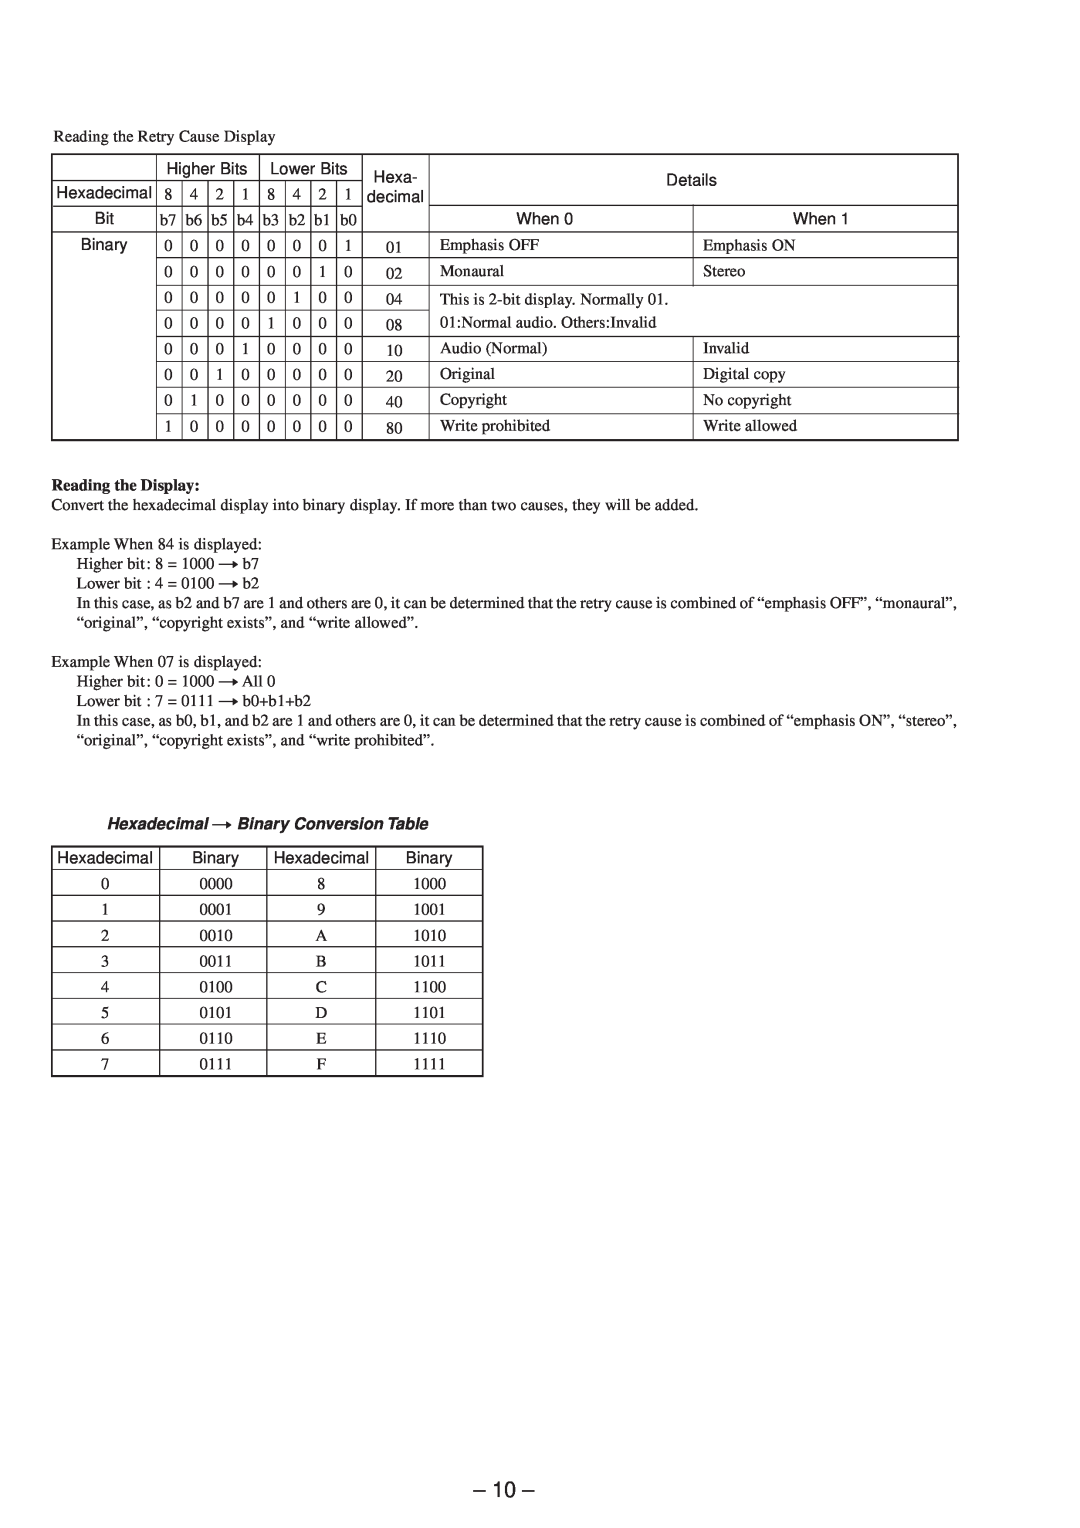 Sony MDS-JE630 service manual Hexadecimal nBinary Conversion Table, Reading the Display 